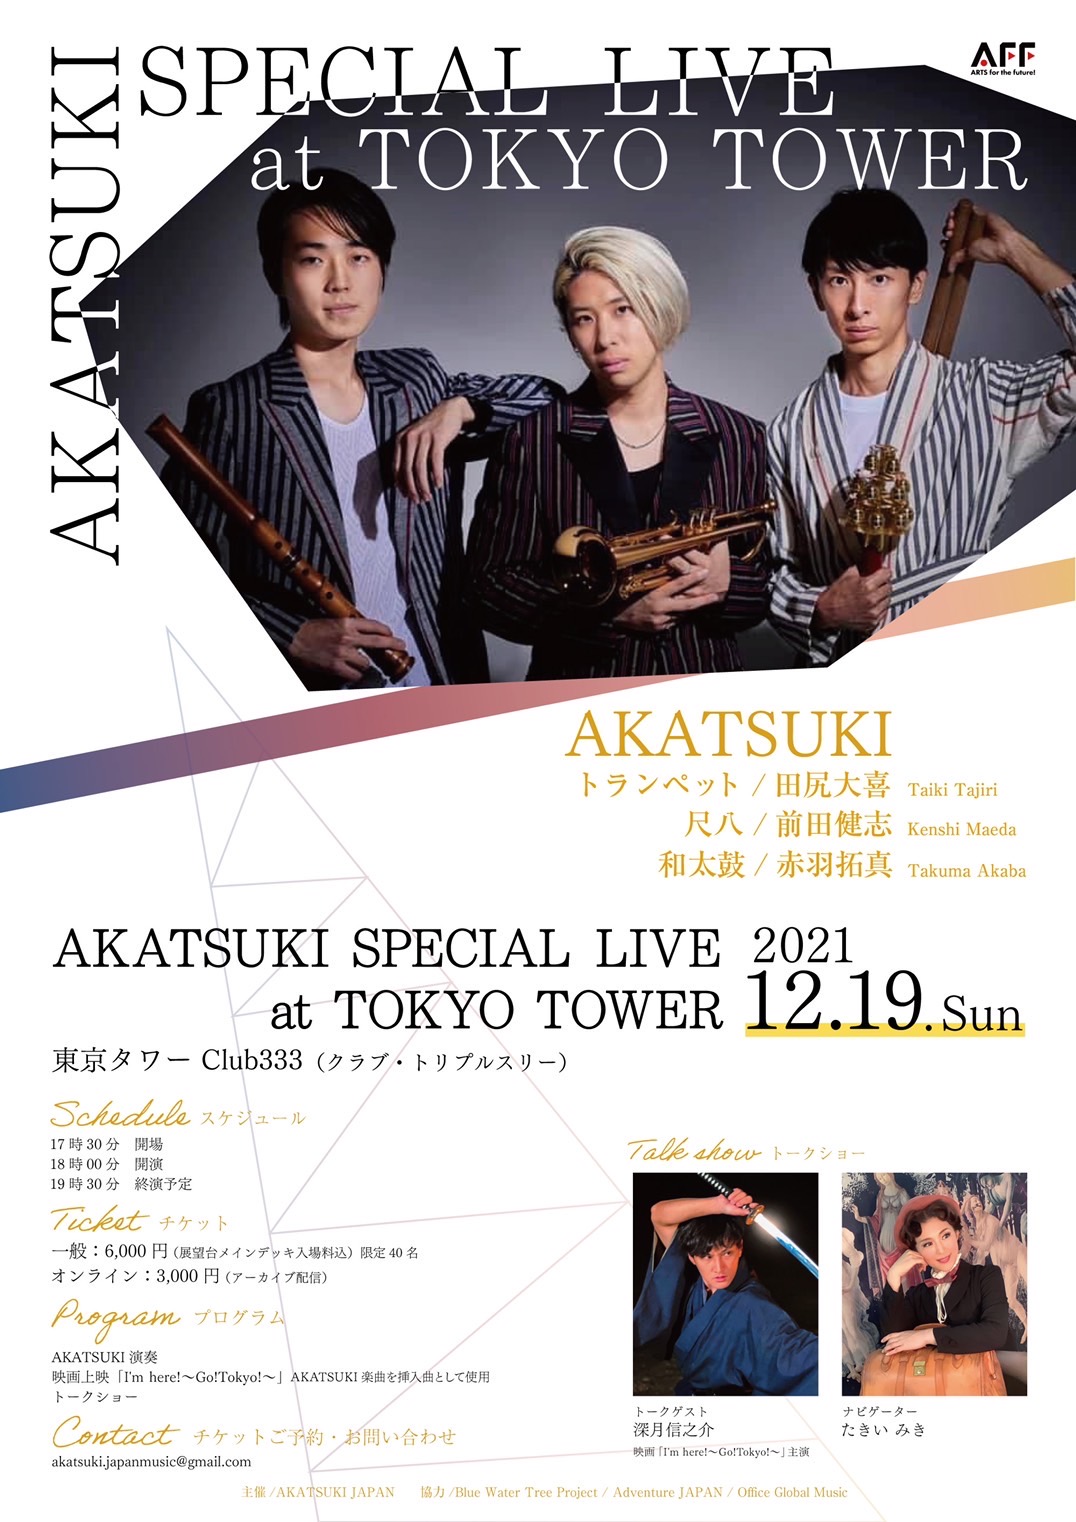 AKATSUKI SPECIAL LIVE at TOKYO TOWER